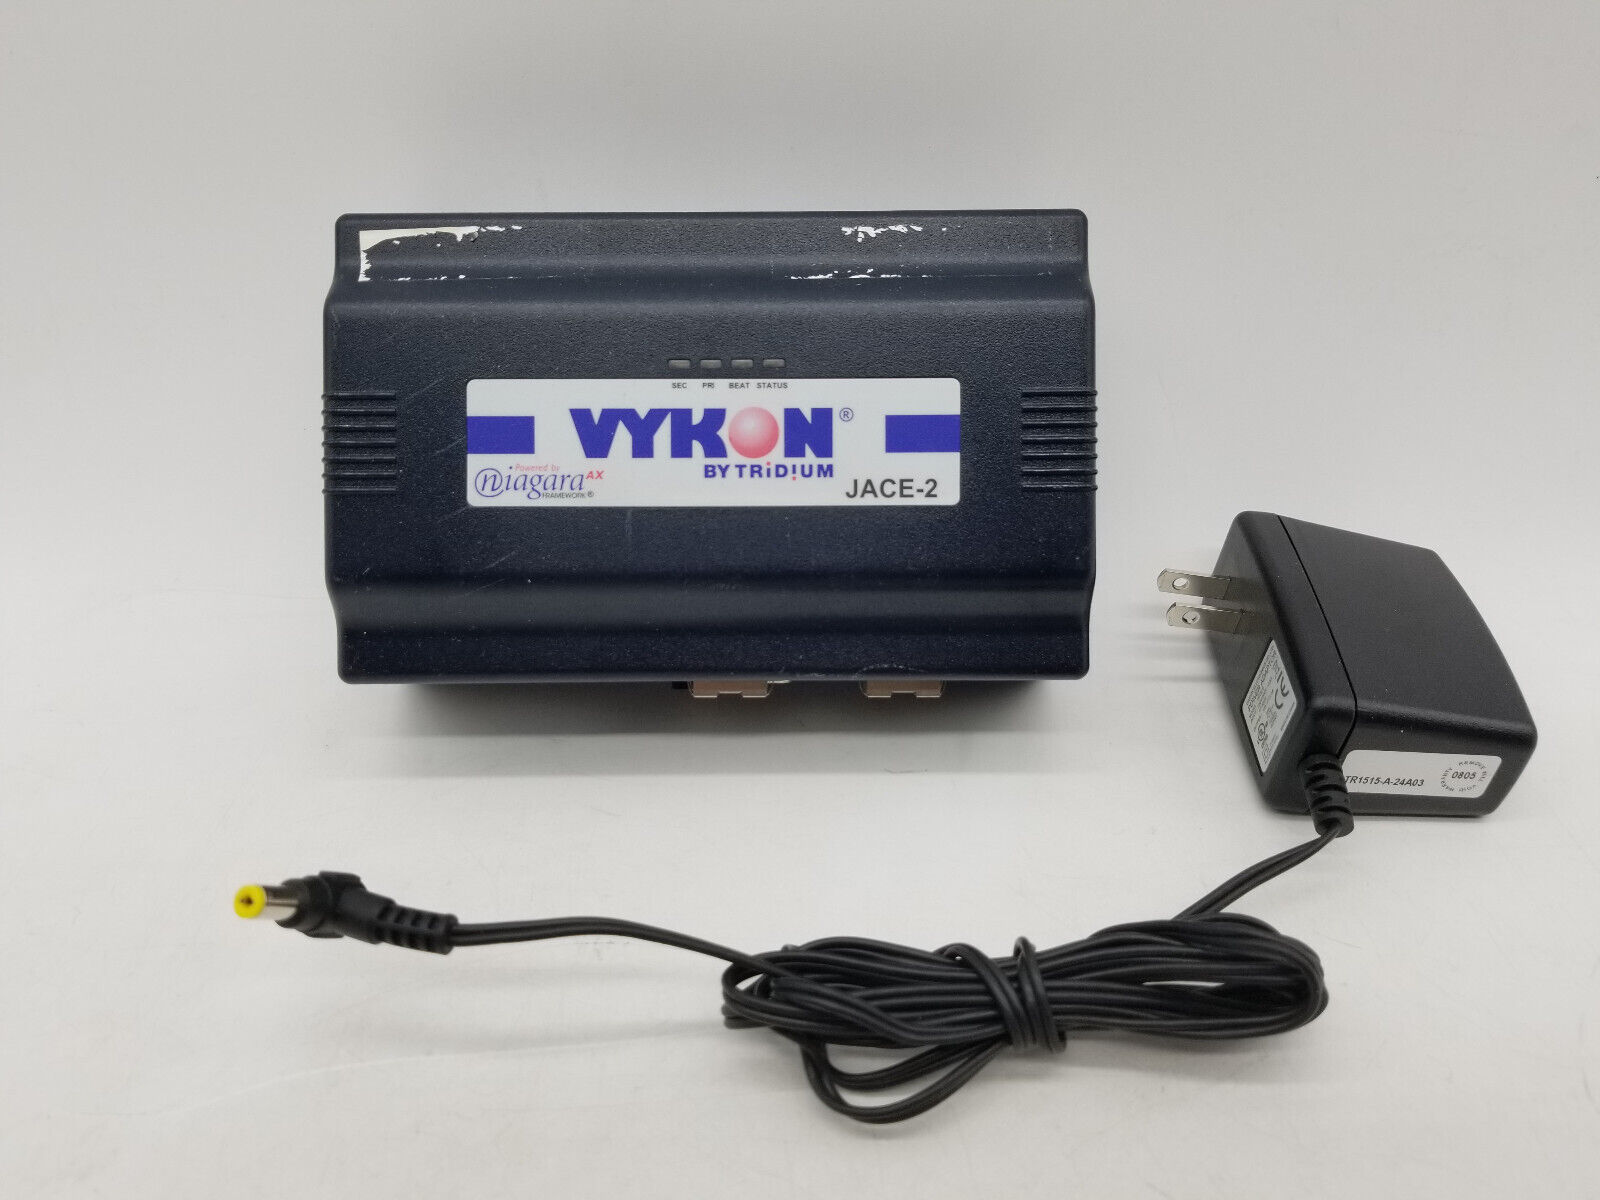 Vykon Tridium JACE-2 Embedded Controller/Server Platform